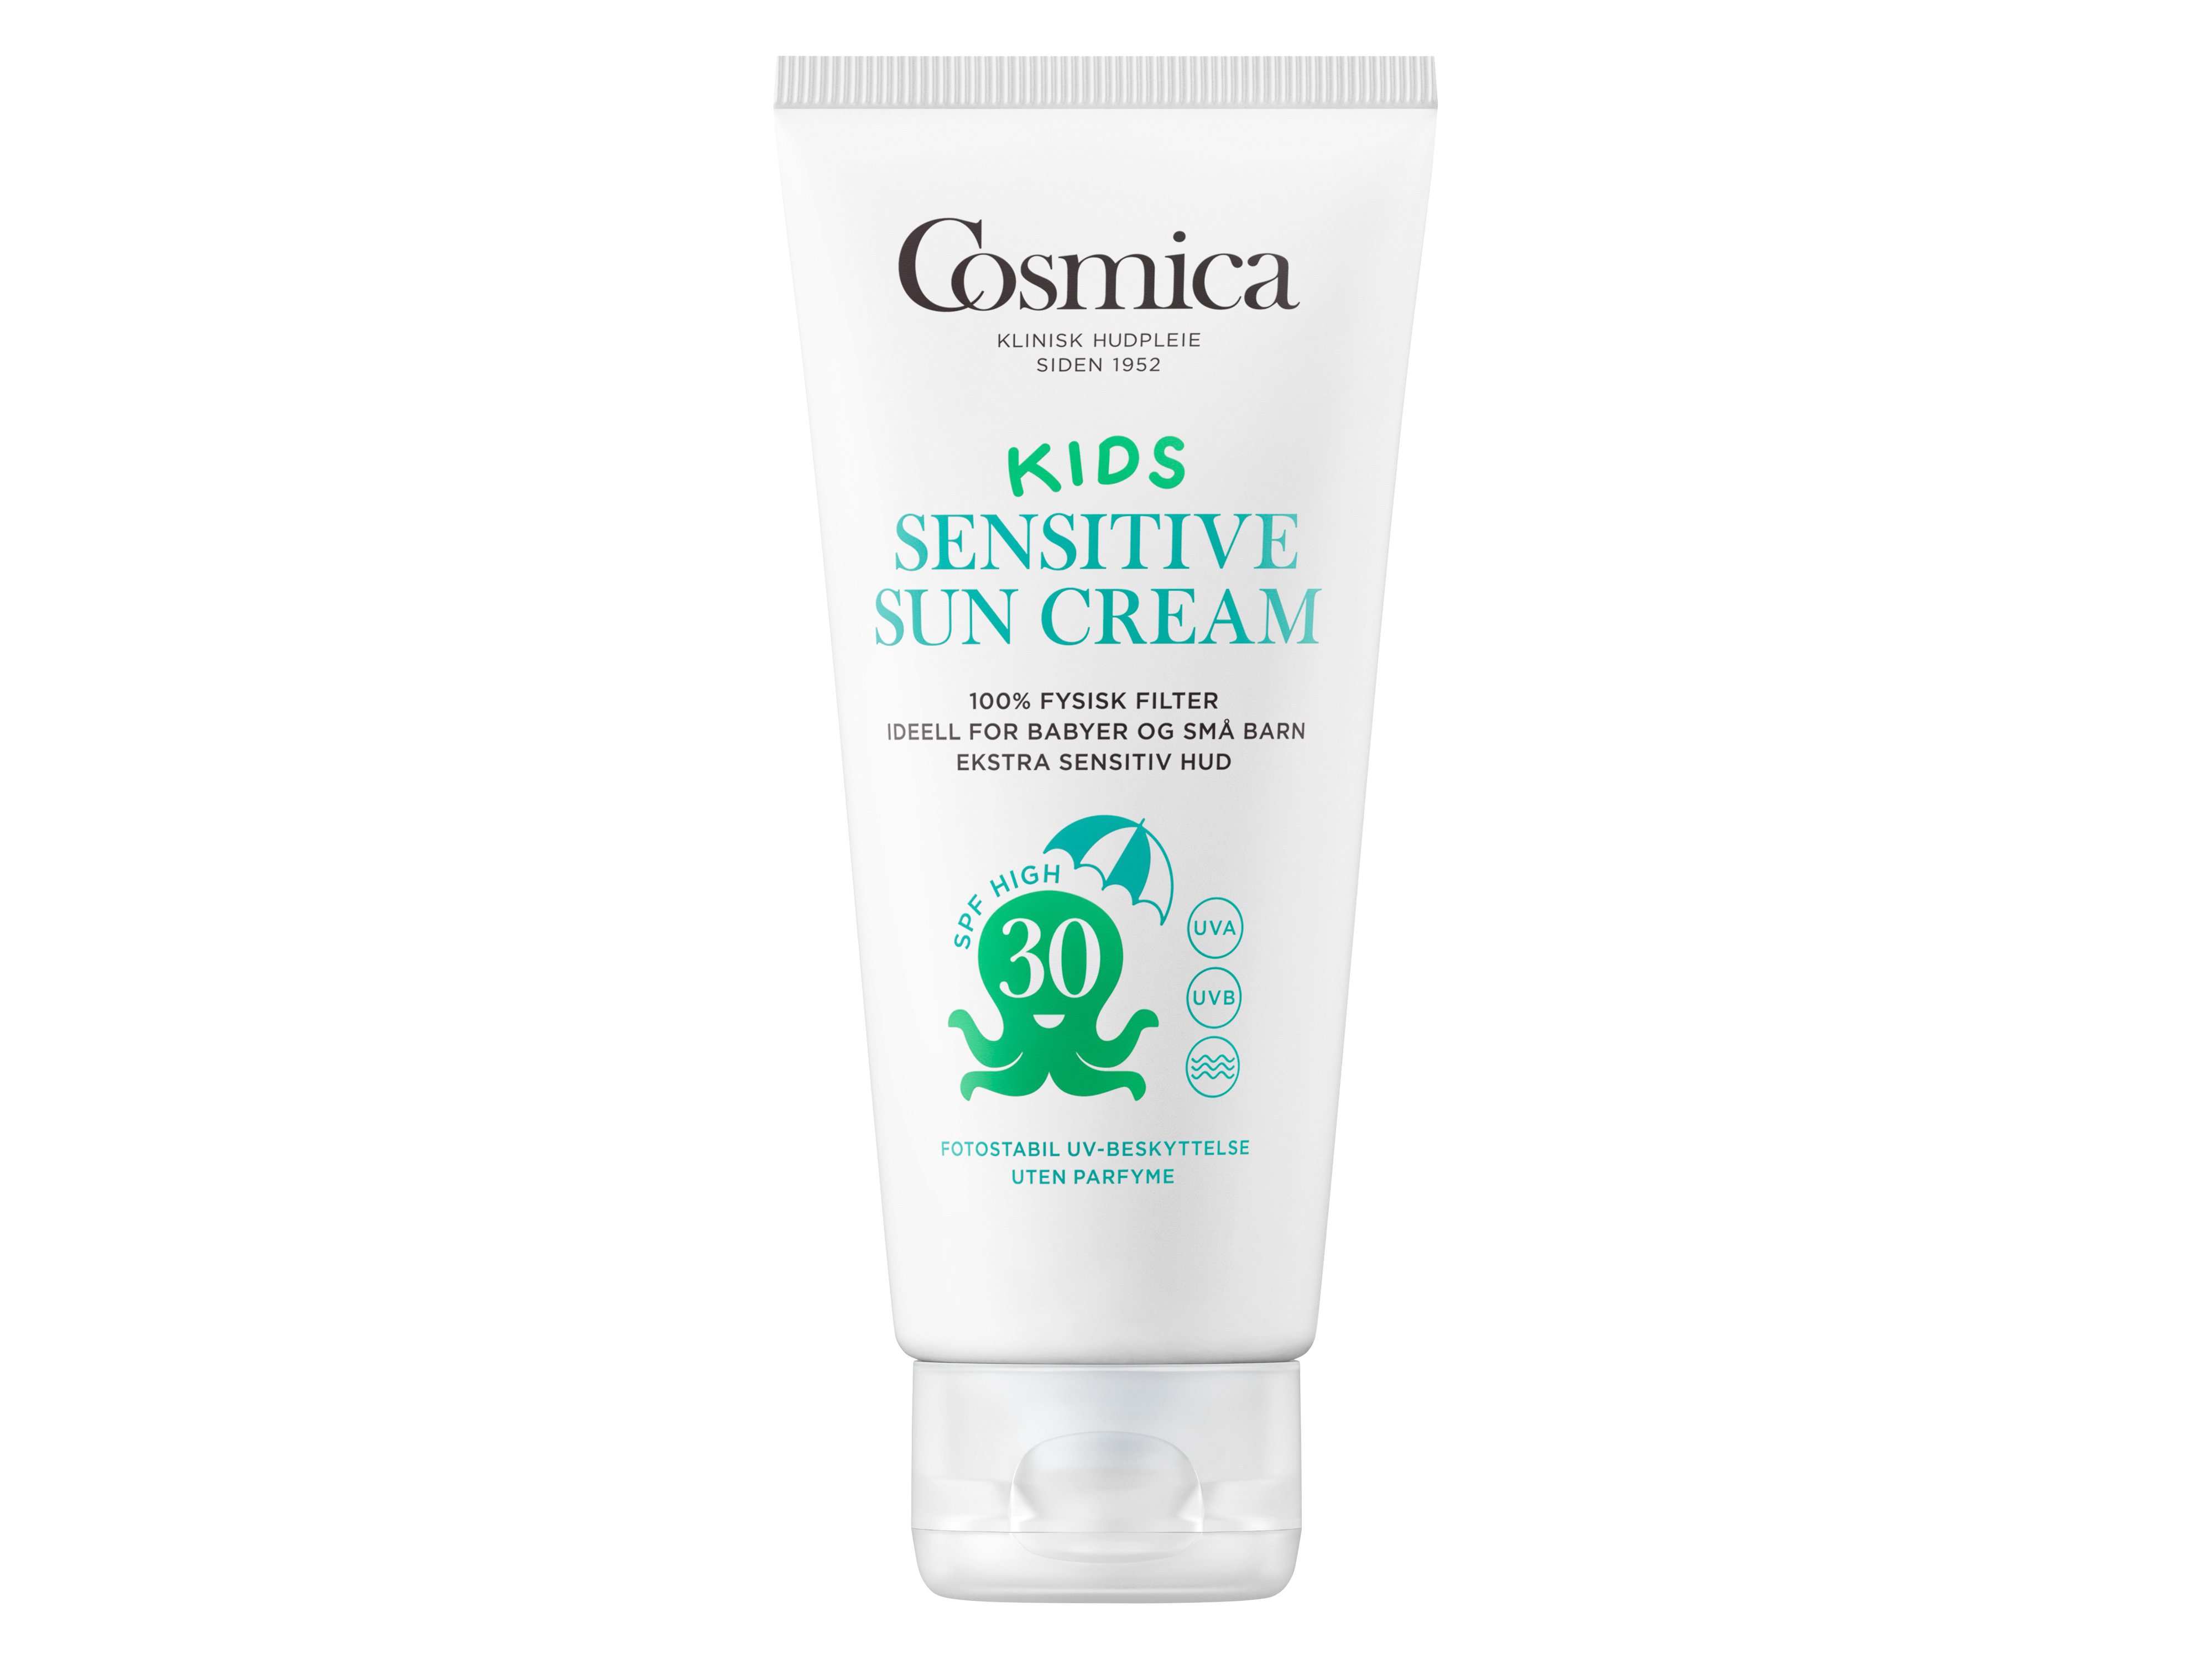 Cosmica Kids Sensitive Sun Cream u/p, SPF 30, 100 ml